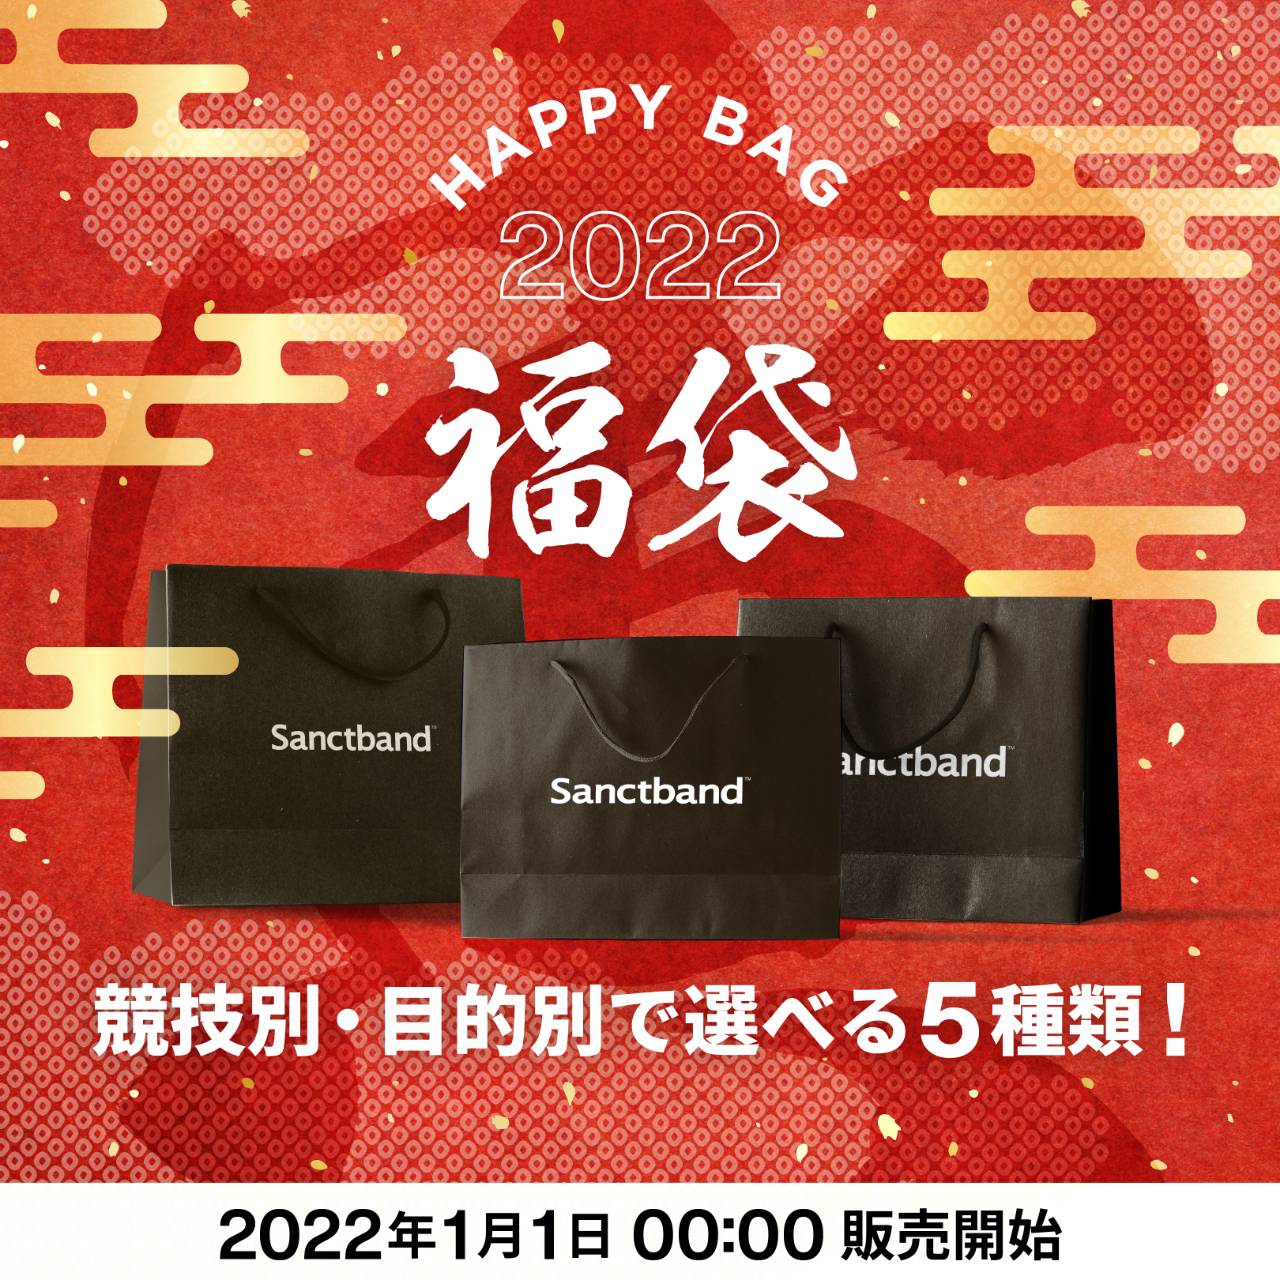 Sanctband 2022年 中身丸わかり初売り福袋！